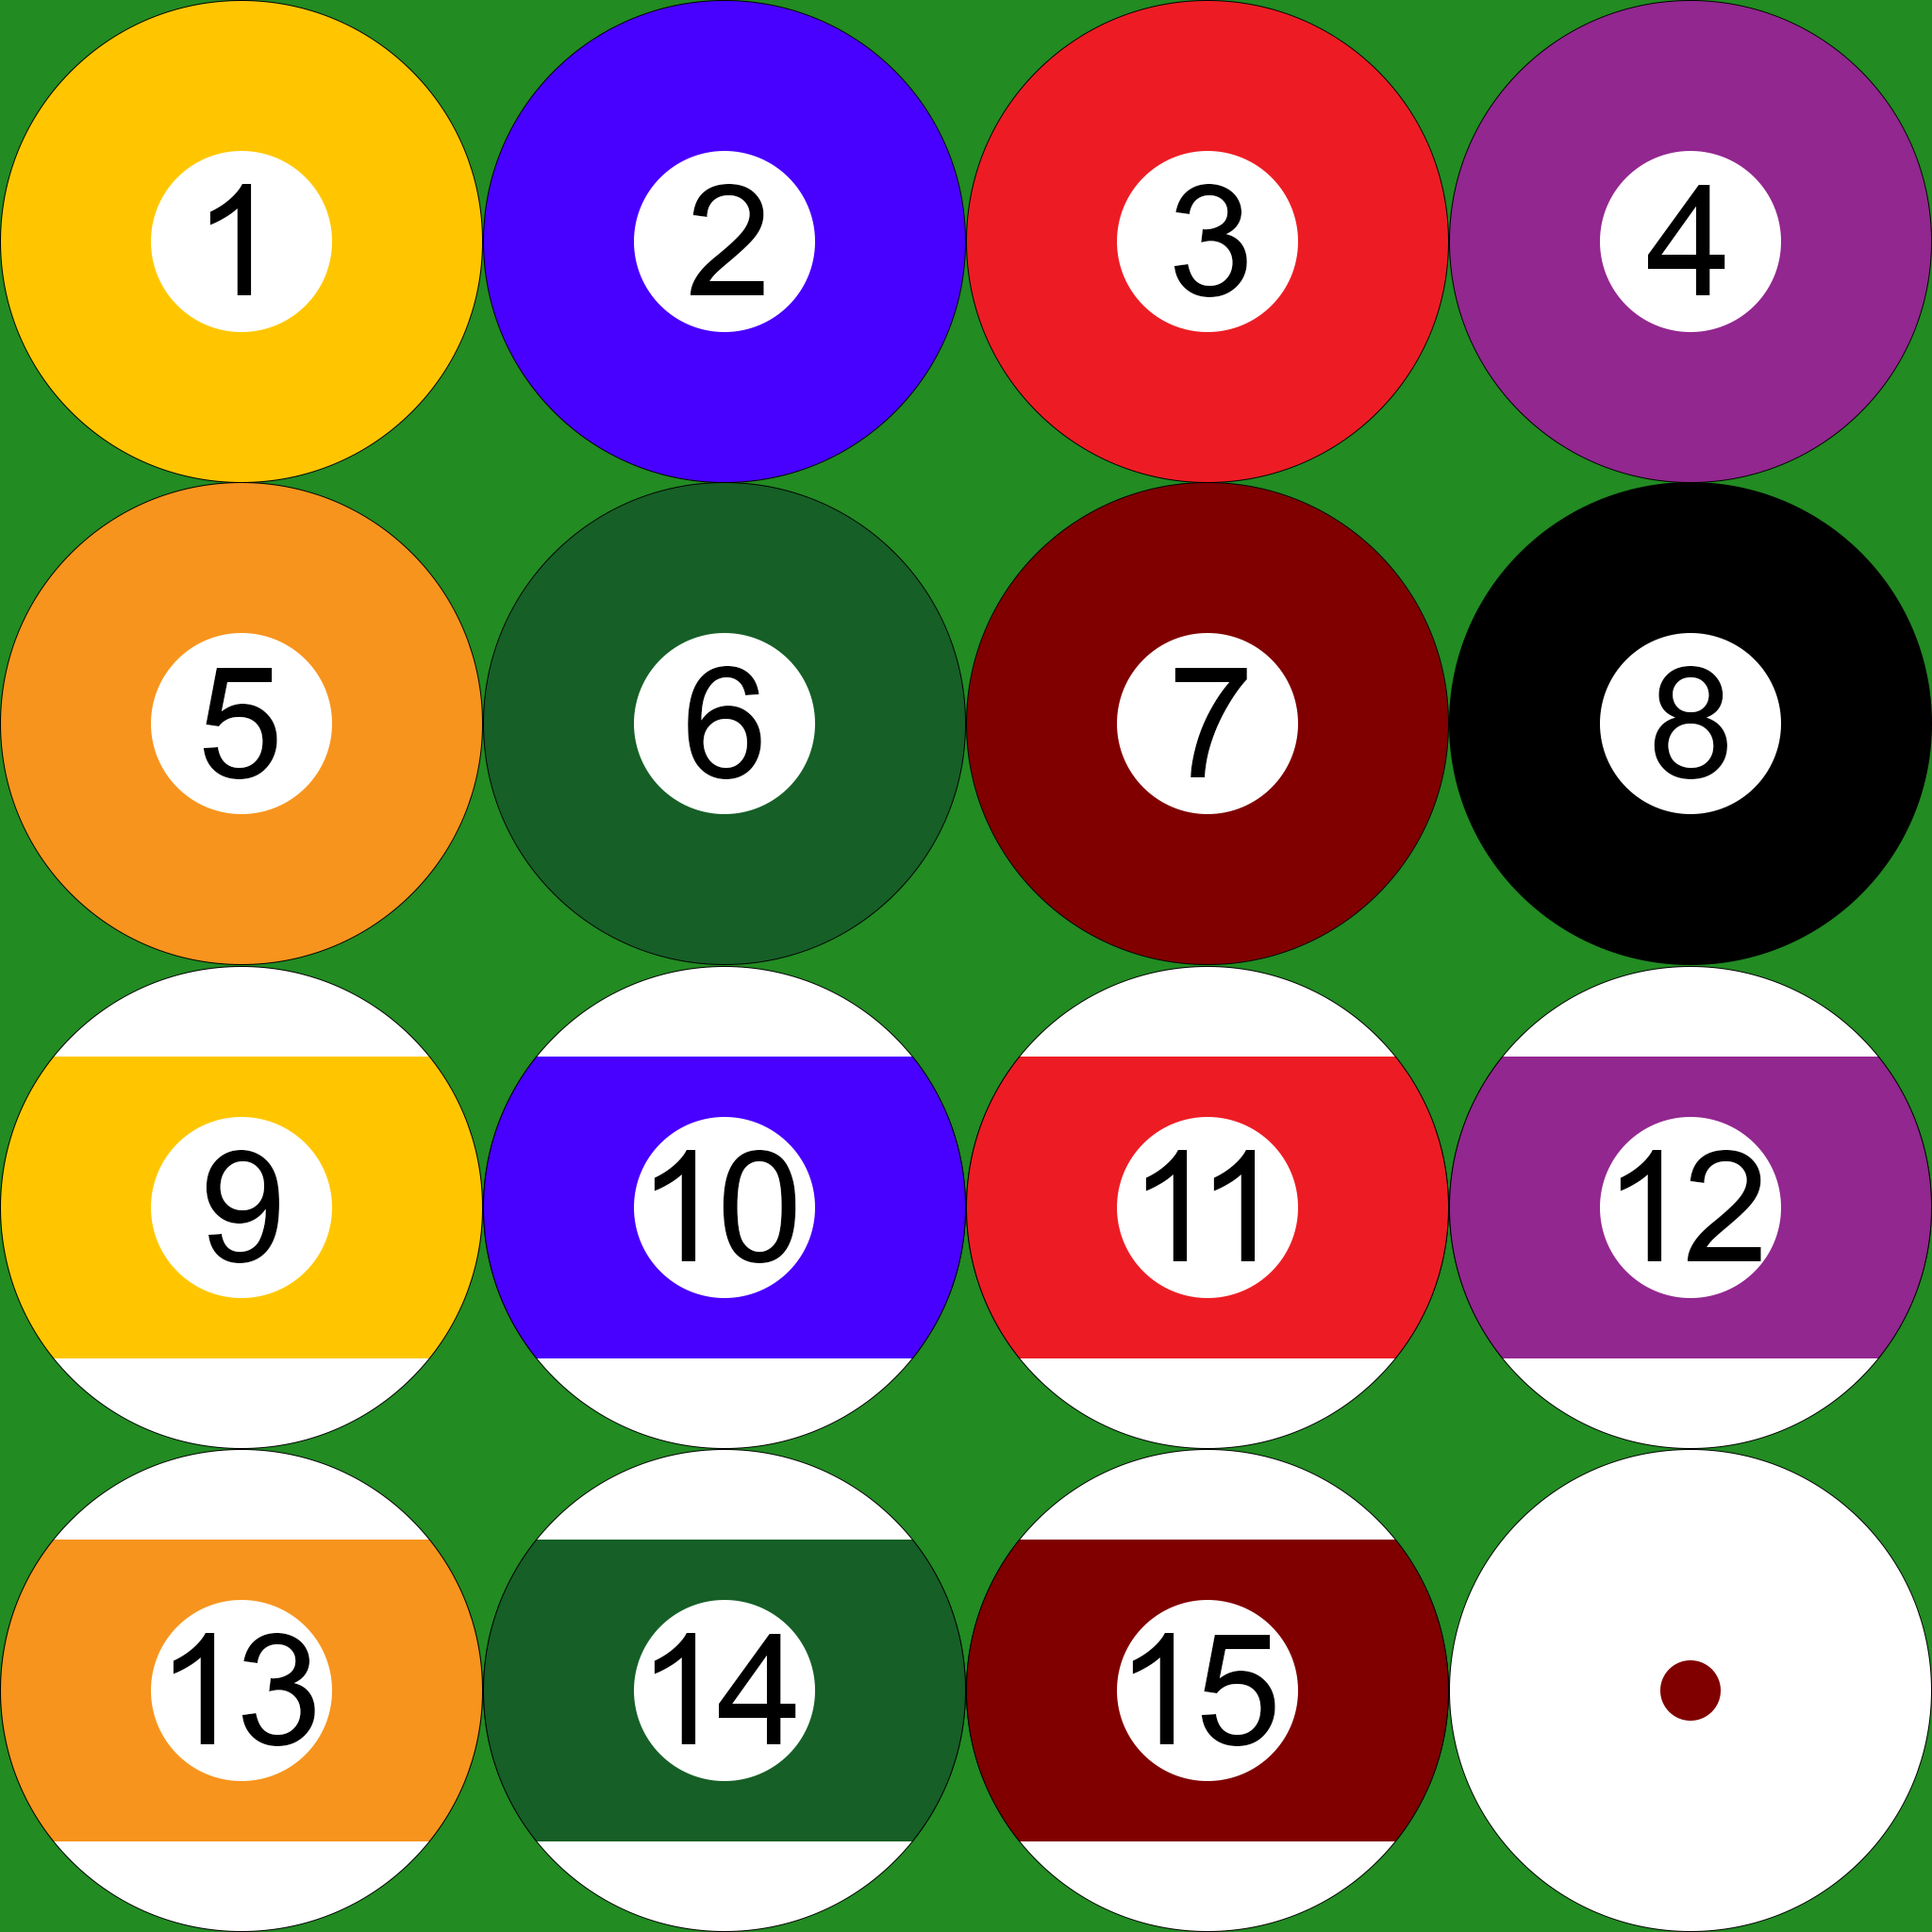 File:Pool balls.png - Wikimedia Commons